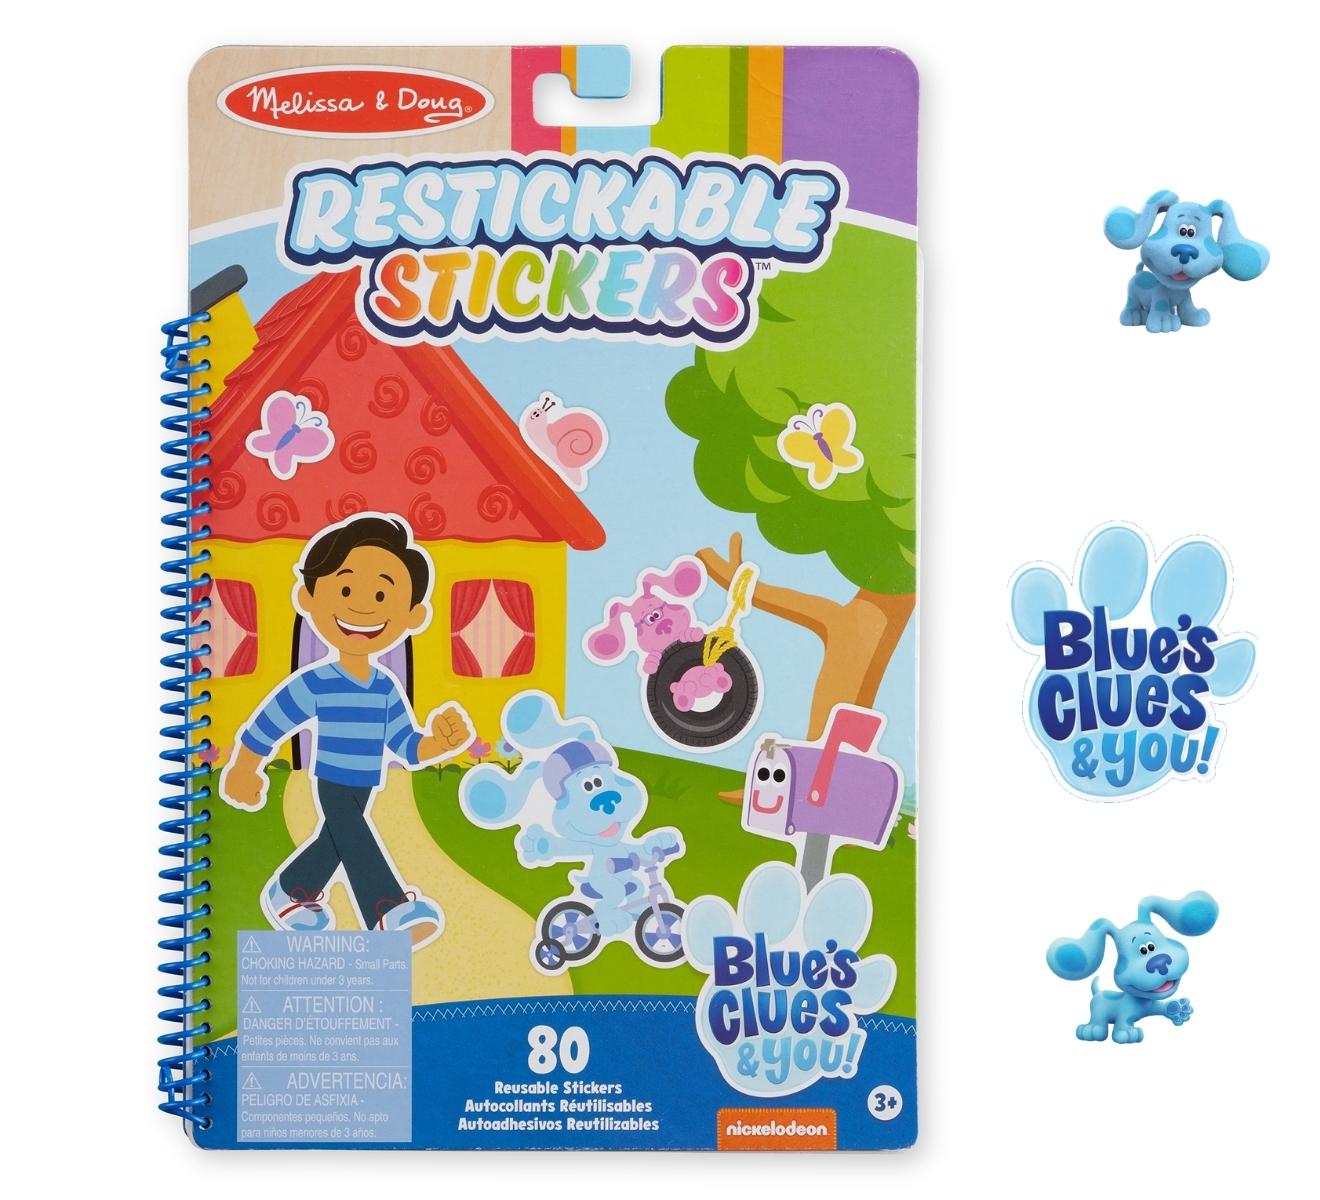 [New!! รียูส Blues ] รุ่น 33003 สติกเกอร์รียูส Blue's Clues & You!  รุ่น "Places Blue Loves" Melissa & Doug Blue's Clues & You! Restickable Stickers Pad - Places Blue Loves รีวิวดีใน Amazon USA ฝึกการออกแบบตกแต่ง เสริมสร้าง